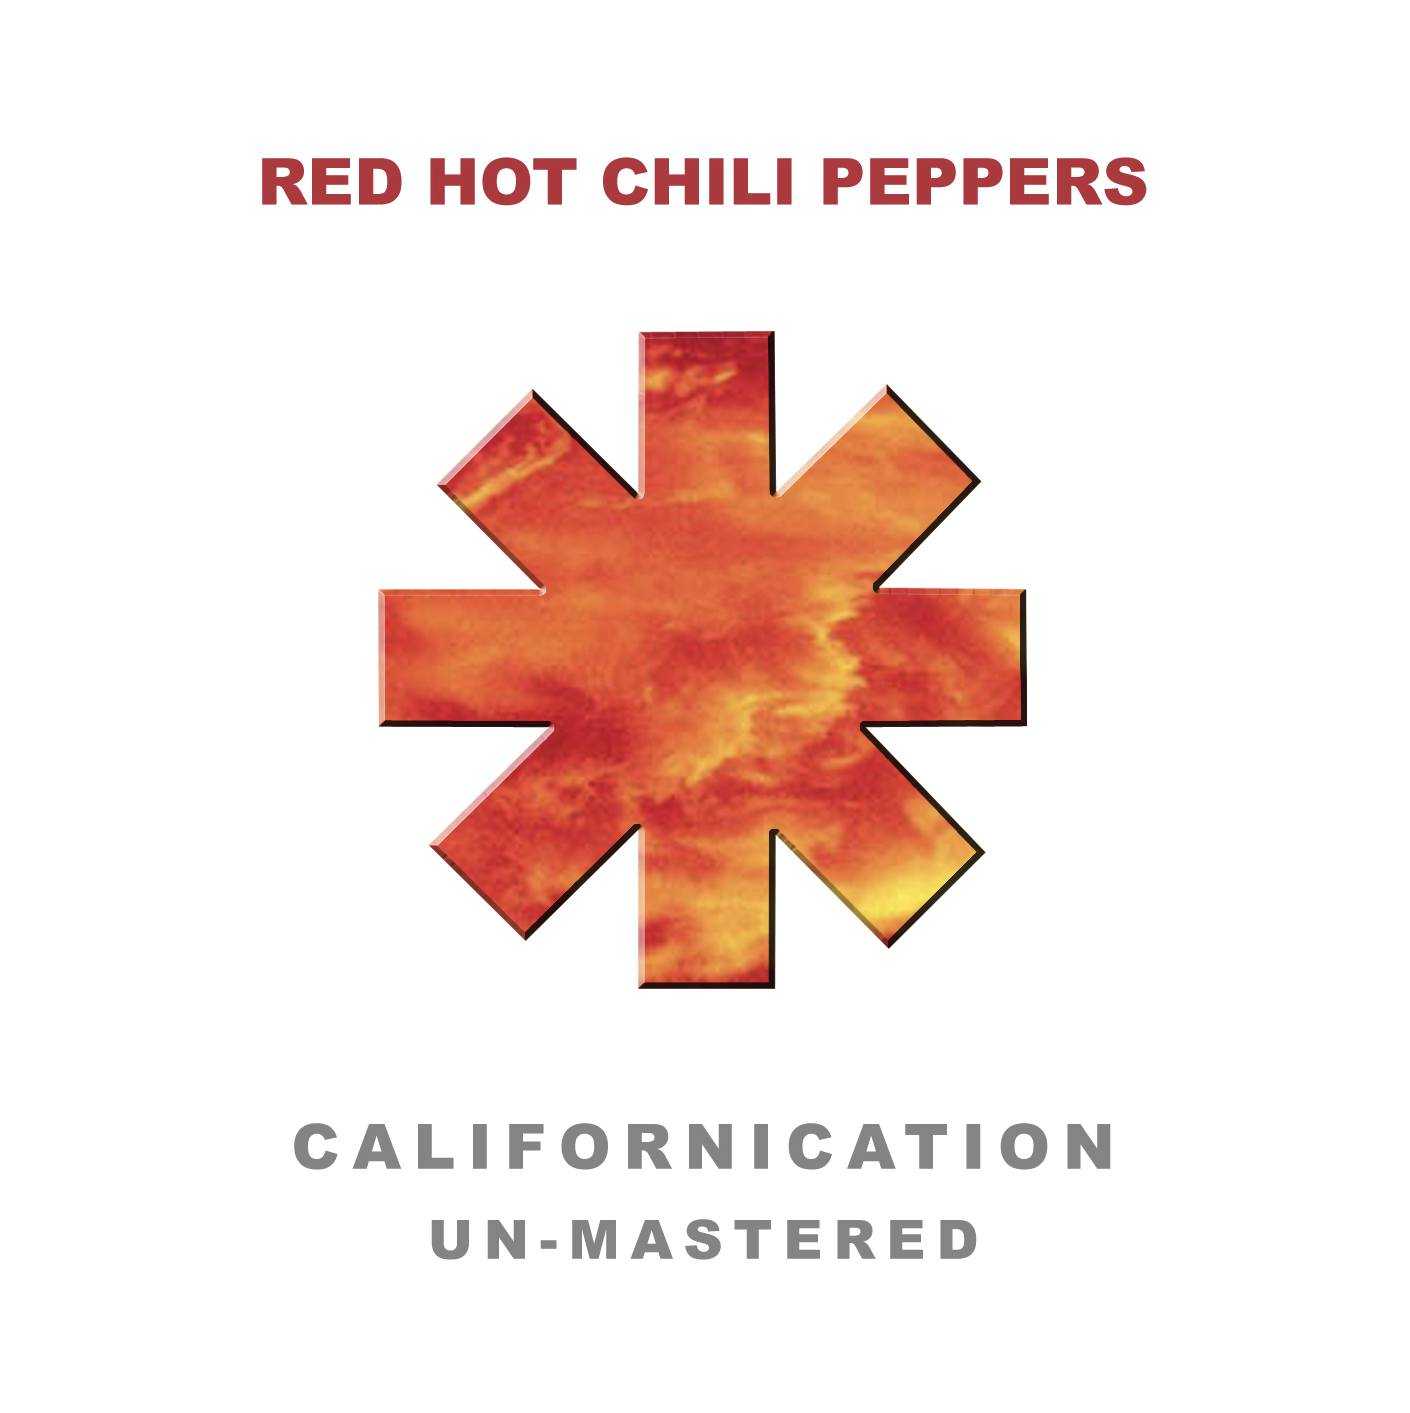 Red hot chili peppers – лучшие саундтреки | fuzz music